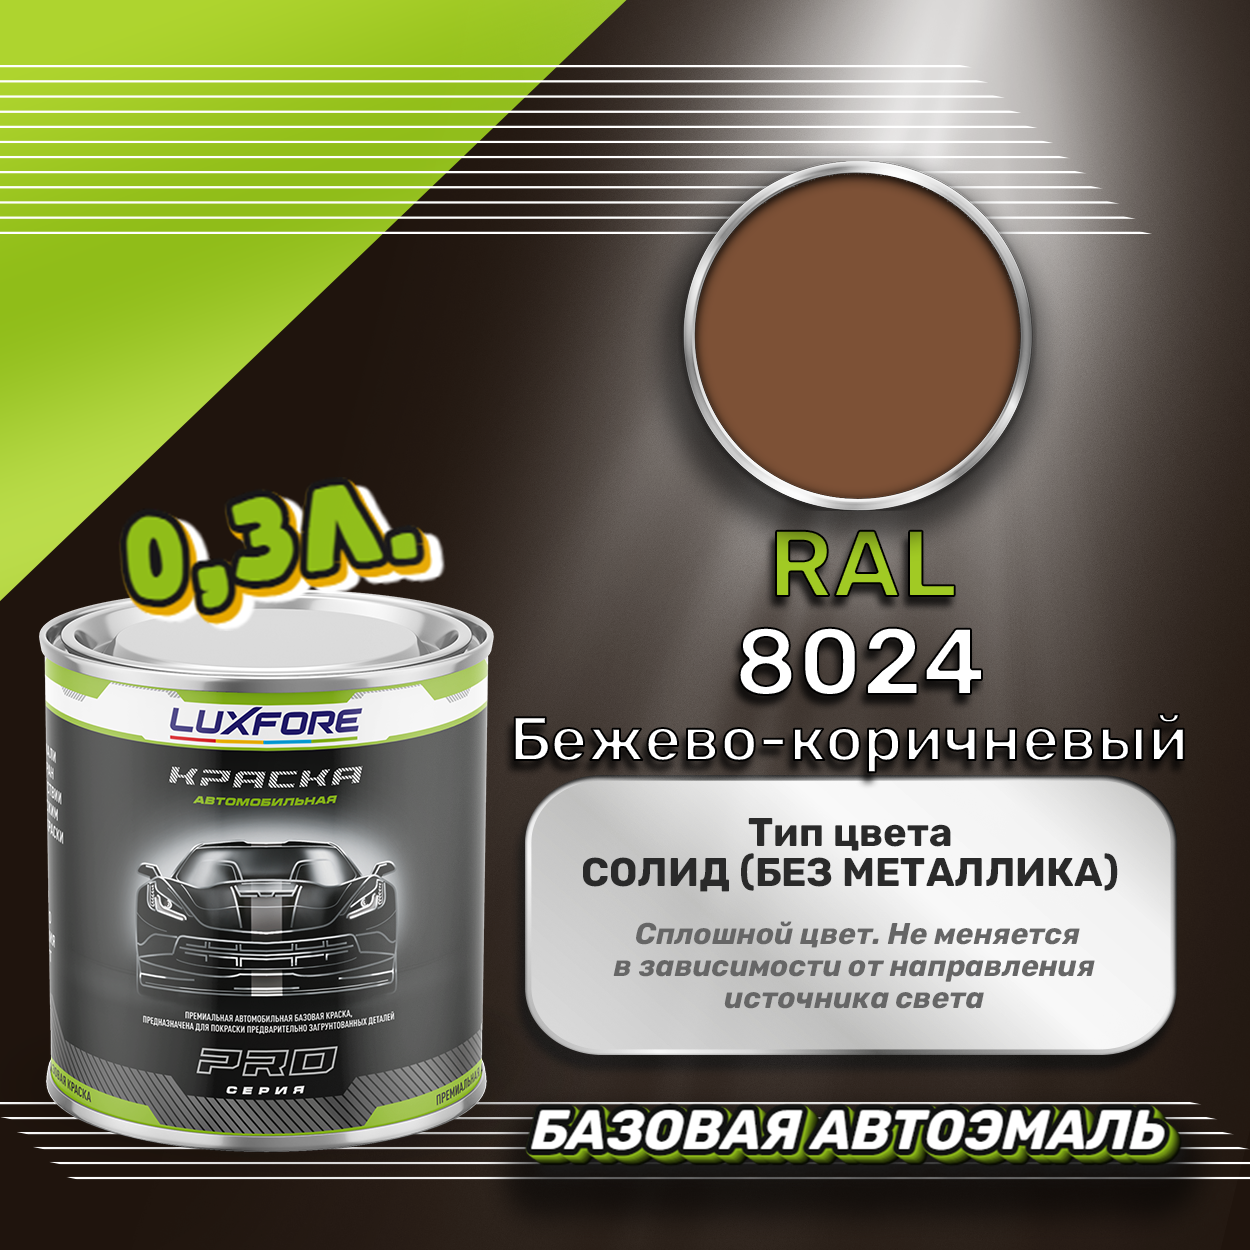 Luxfore краска базовая эмаль RAL 8024 Бежево-коричневый 300 мл